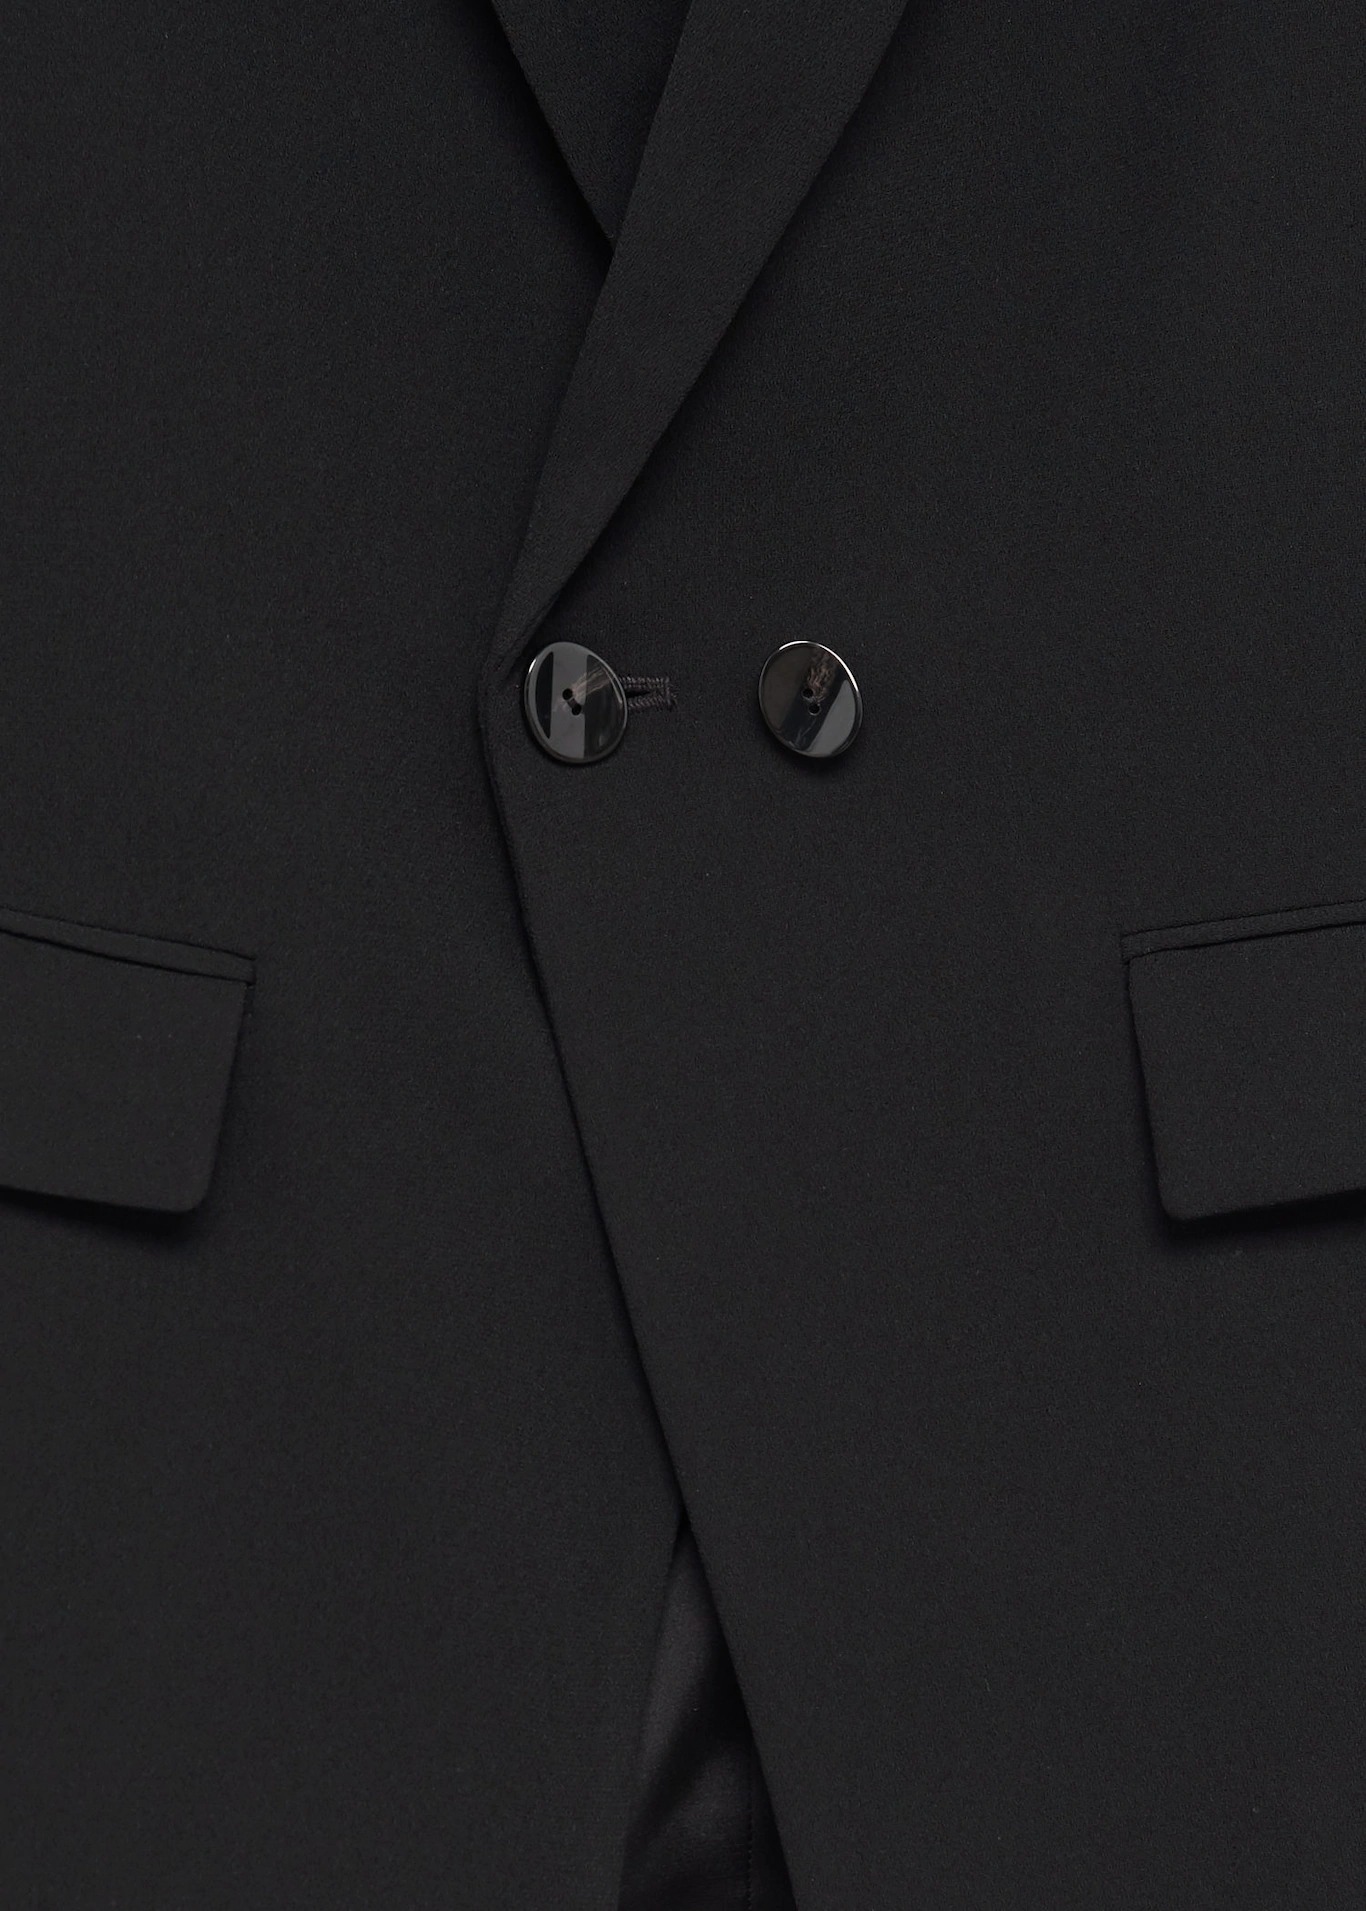 Mango 87064019 Crepe suit jacket with belt size S6